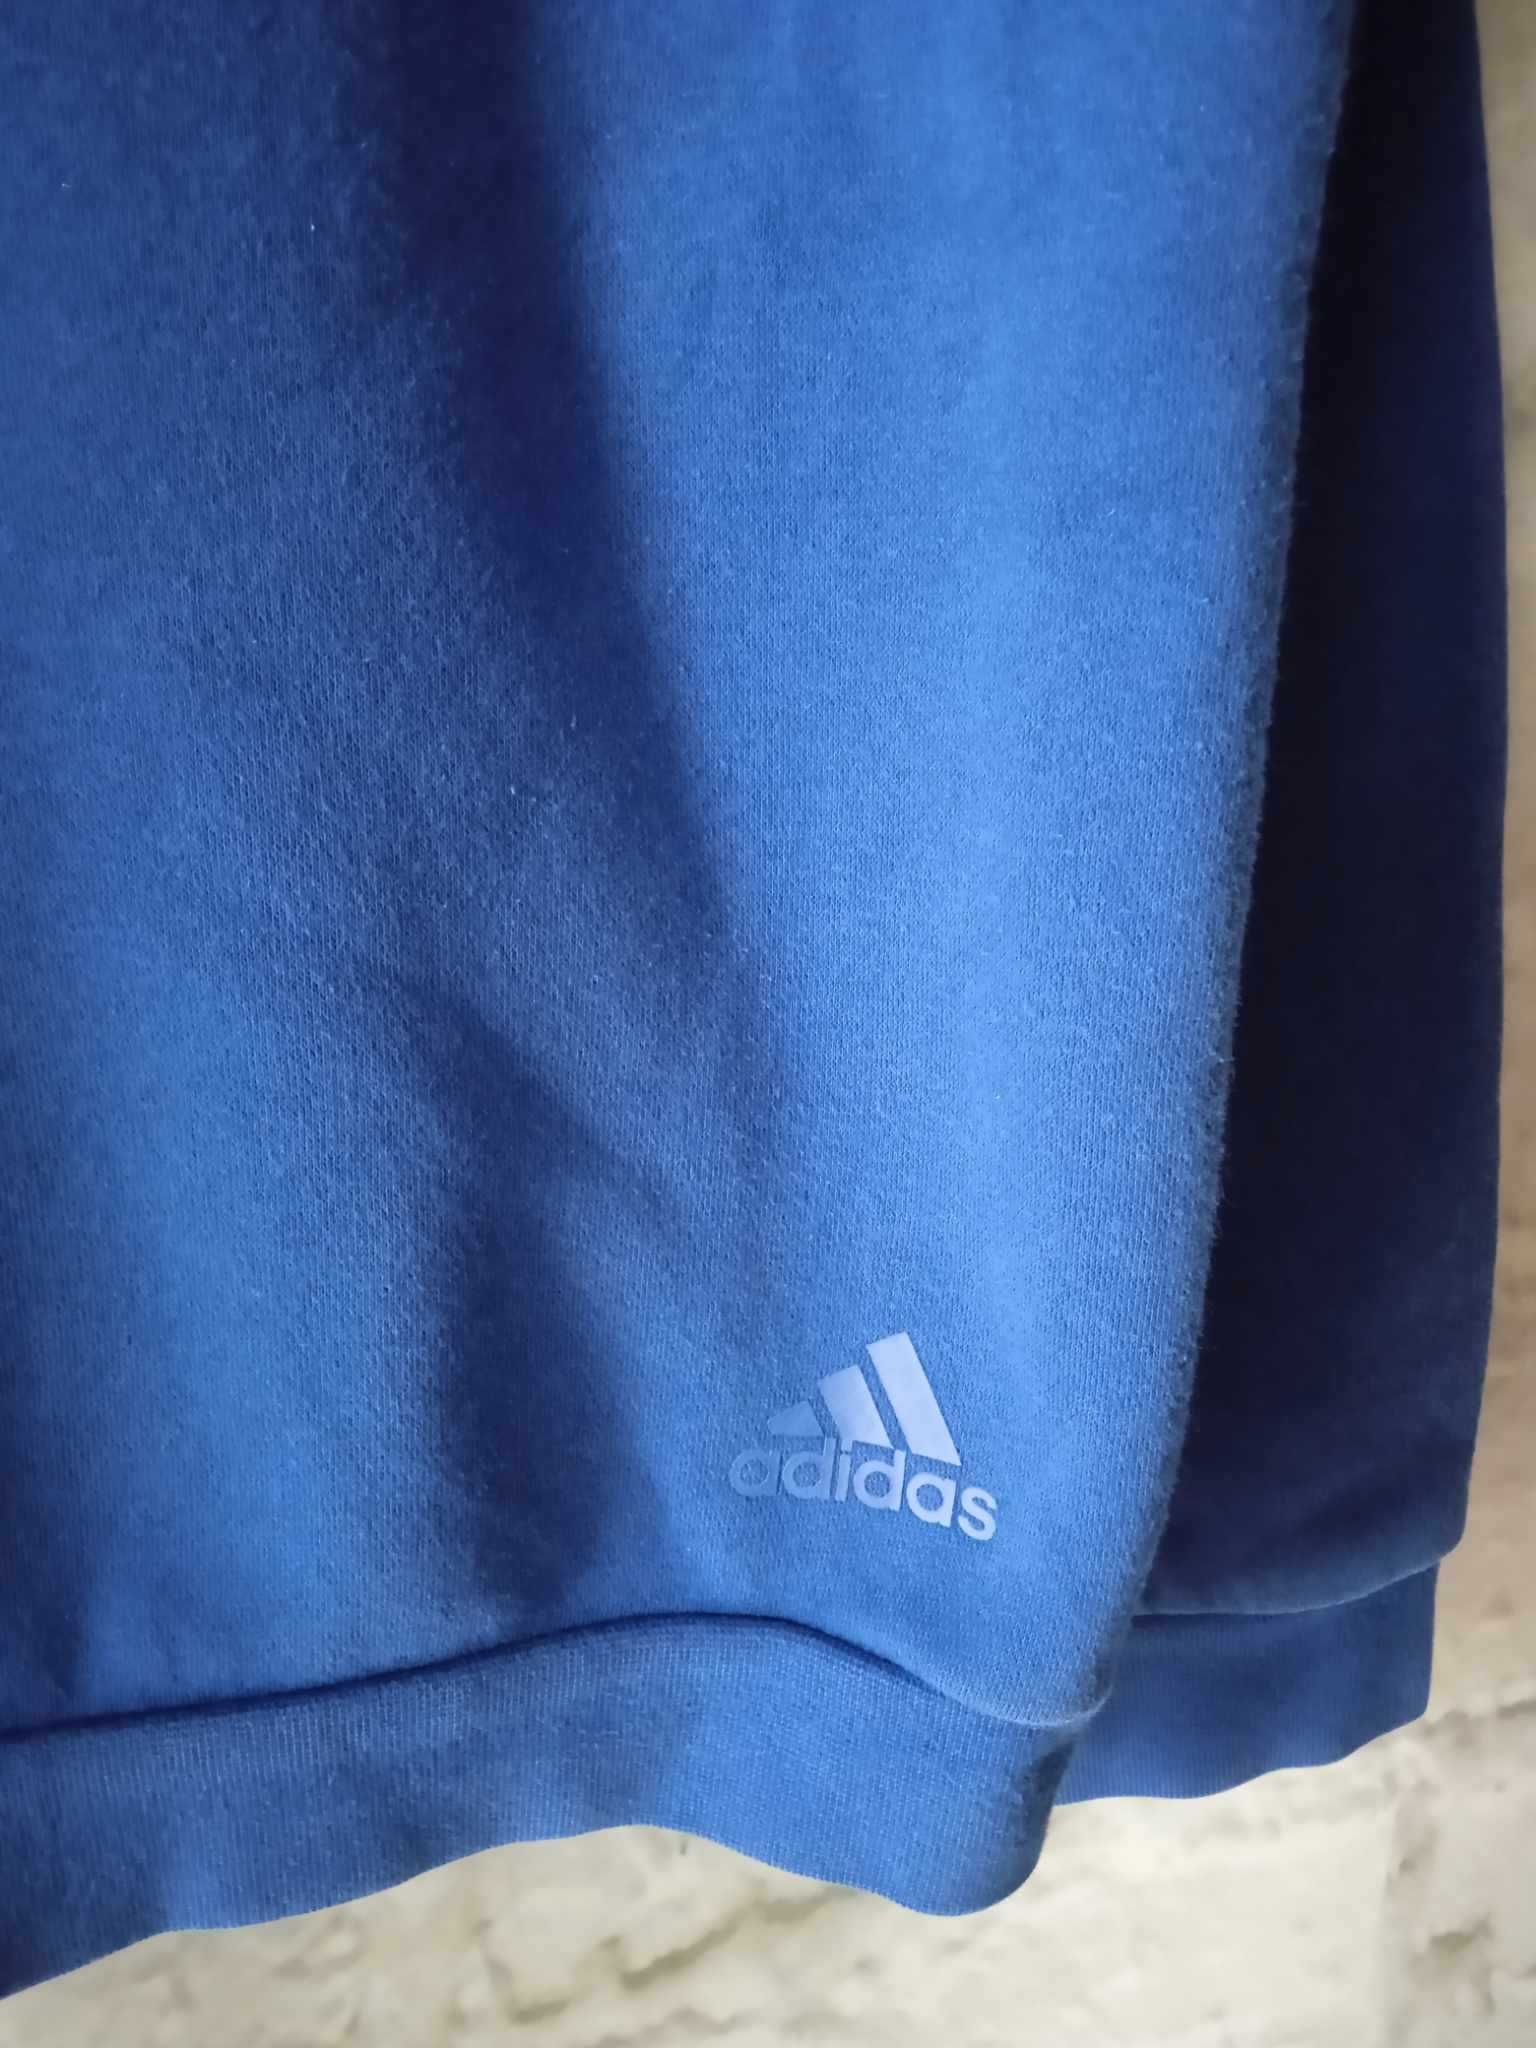 Niebieska bluza Adidas 9-10 lat 140cm